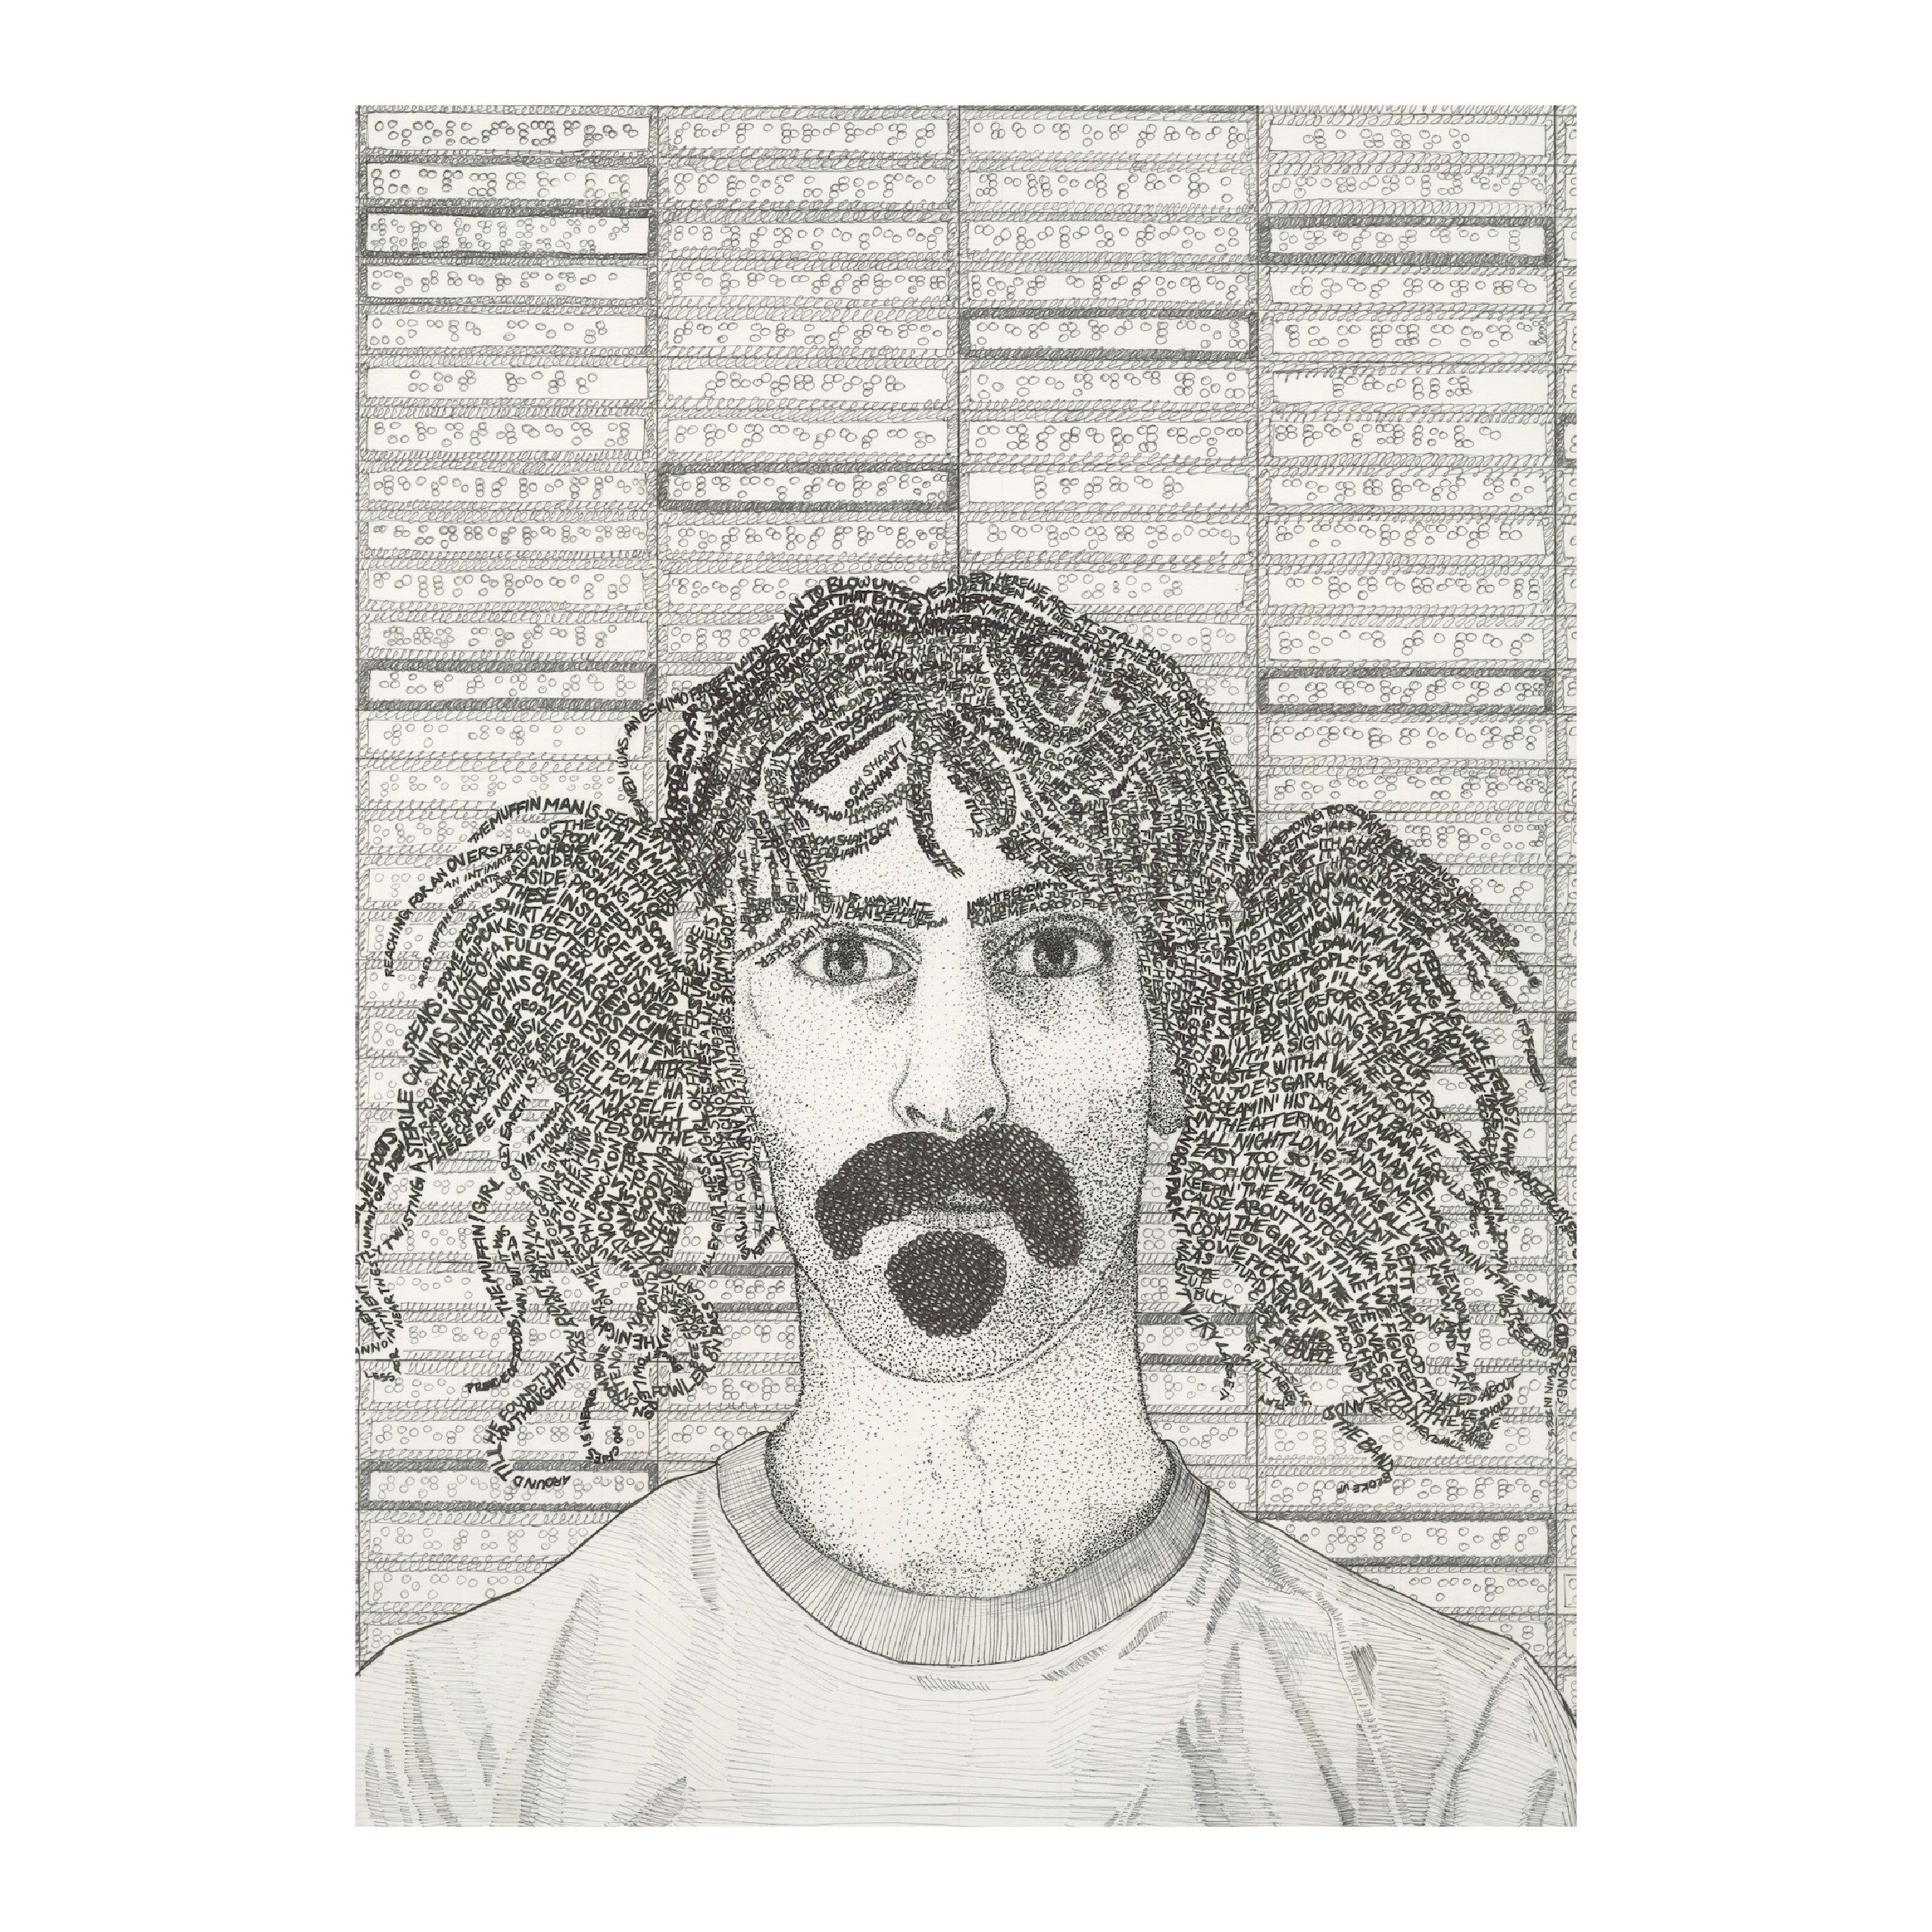 a drawing of Frank Zappa made up of his song lyrics